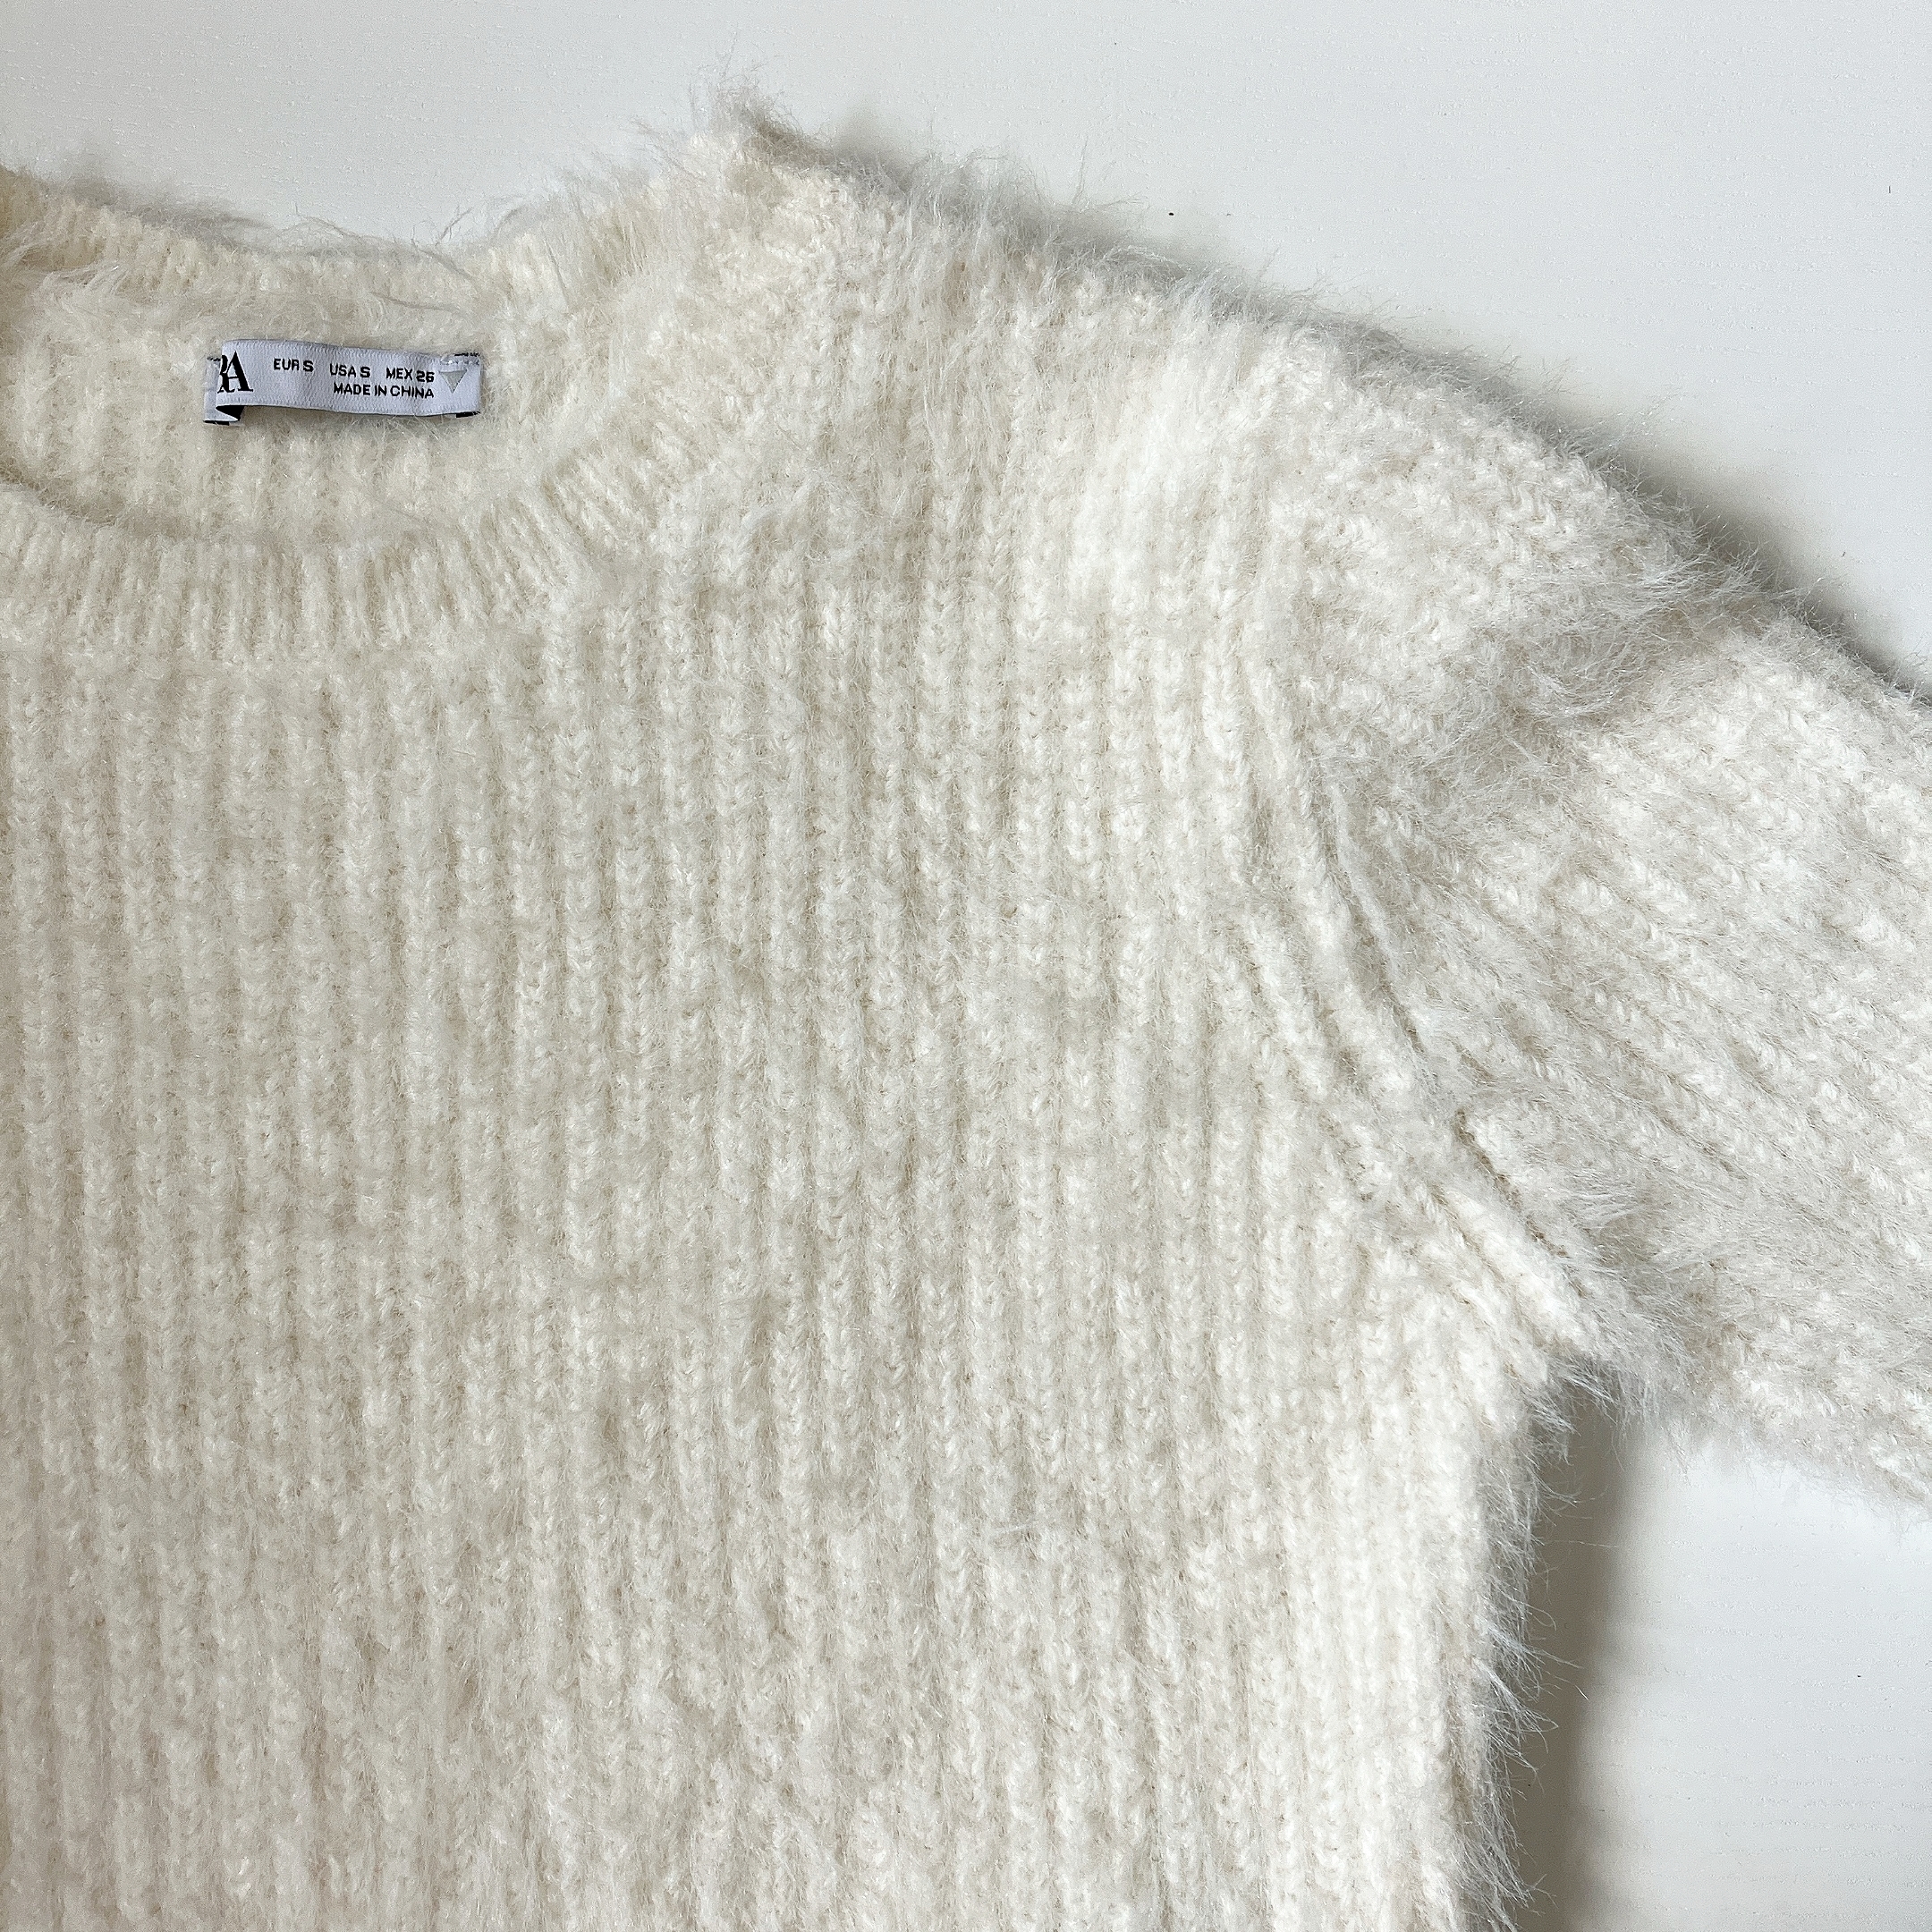 ZARA（ザラ）のおすすめセーター「エコファー素材セーター」